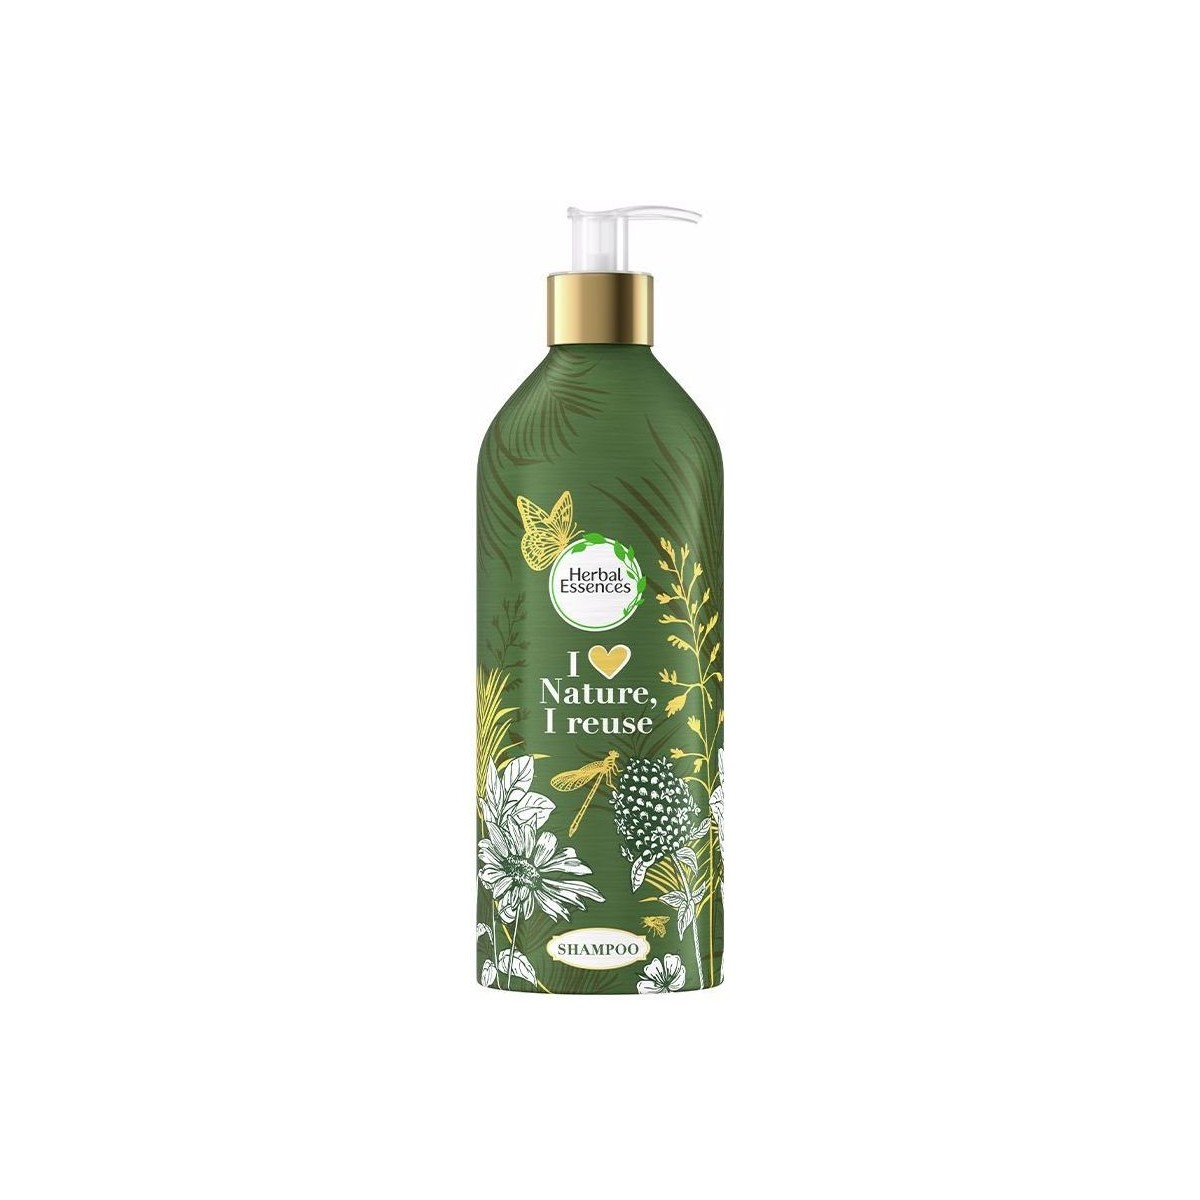 Bellezza Shampoo Herbal Essence Botella Rellanable Aluminio Argan Champú 